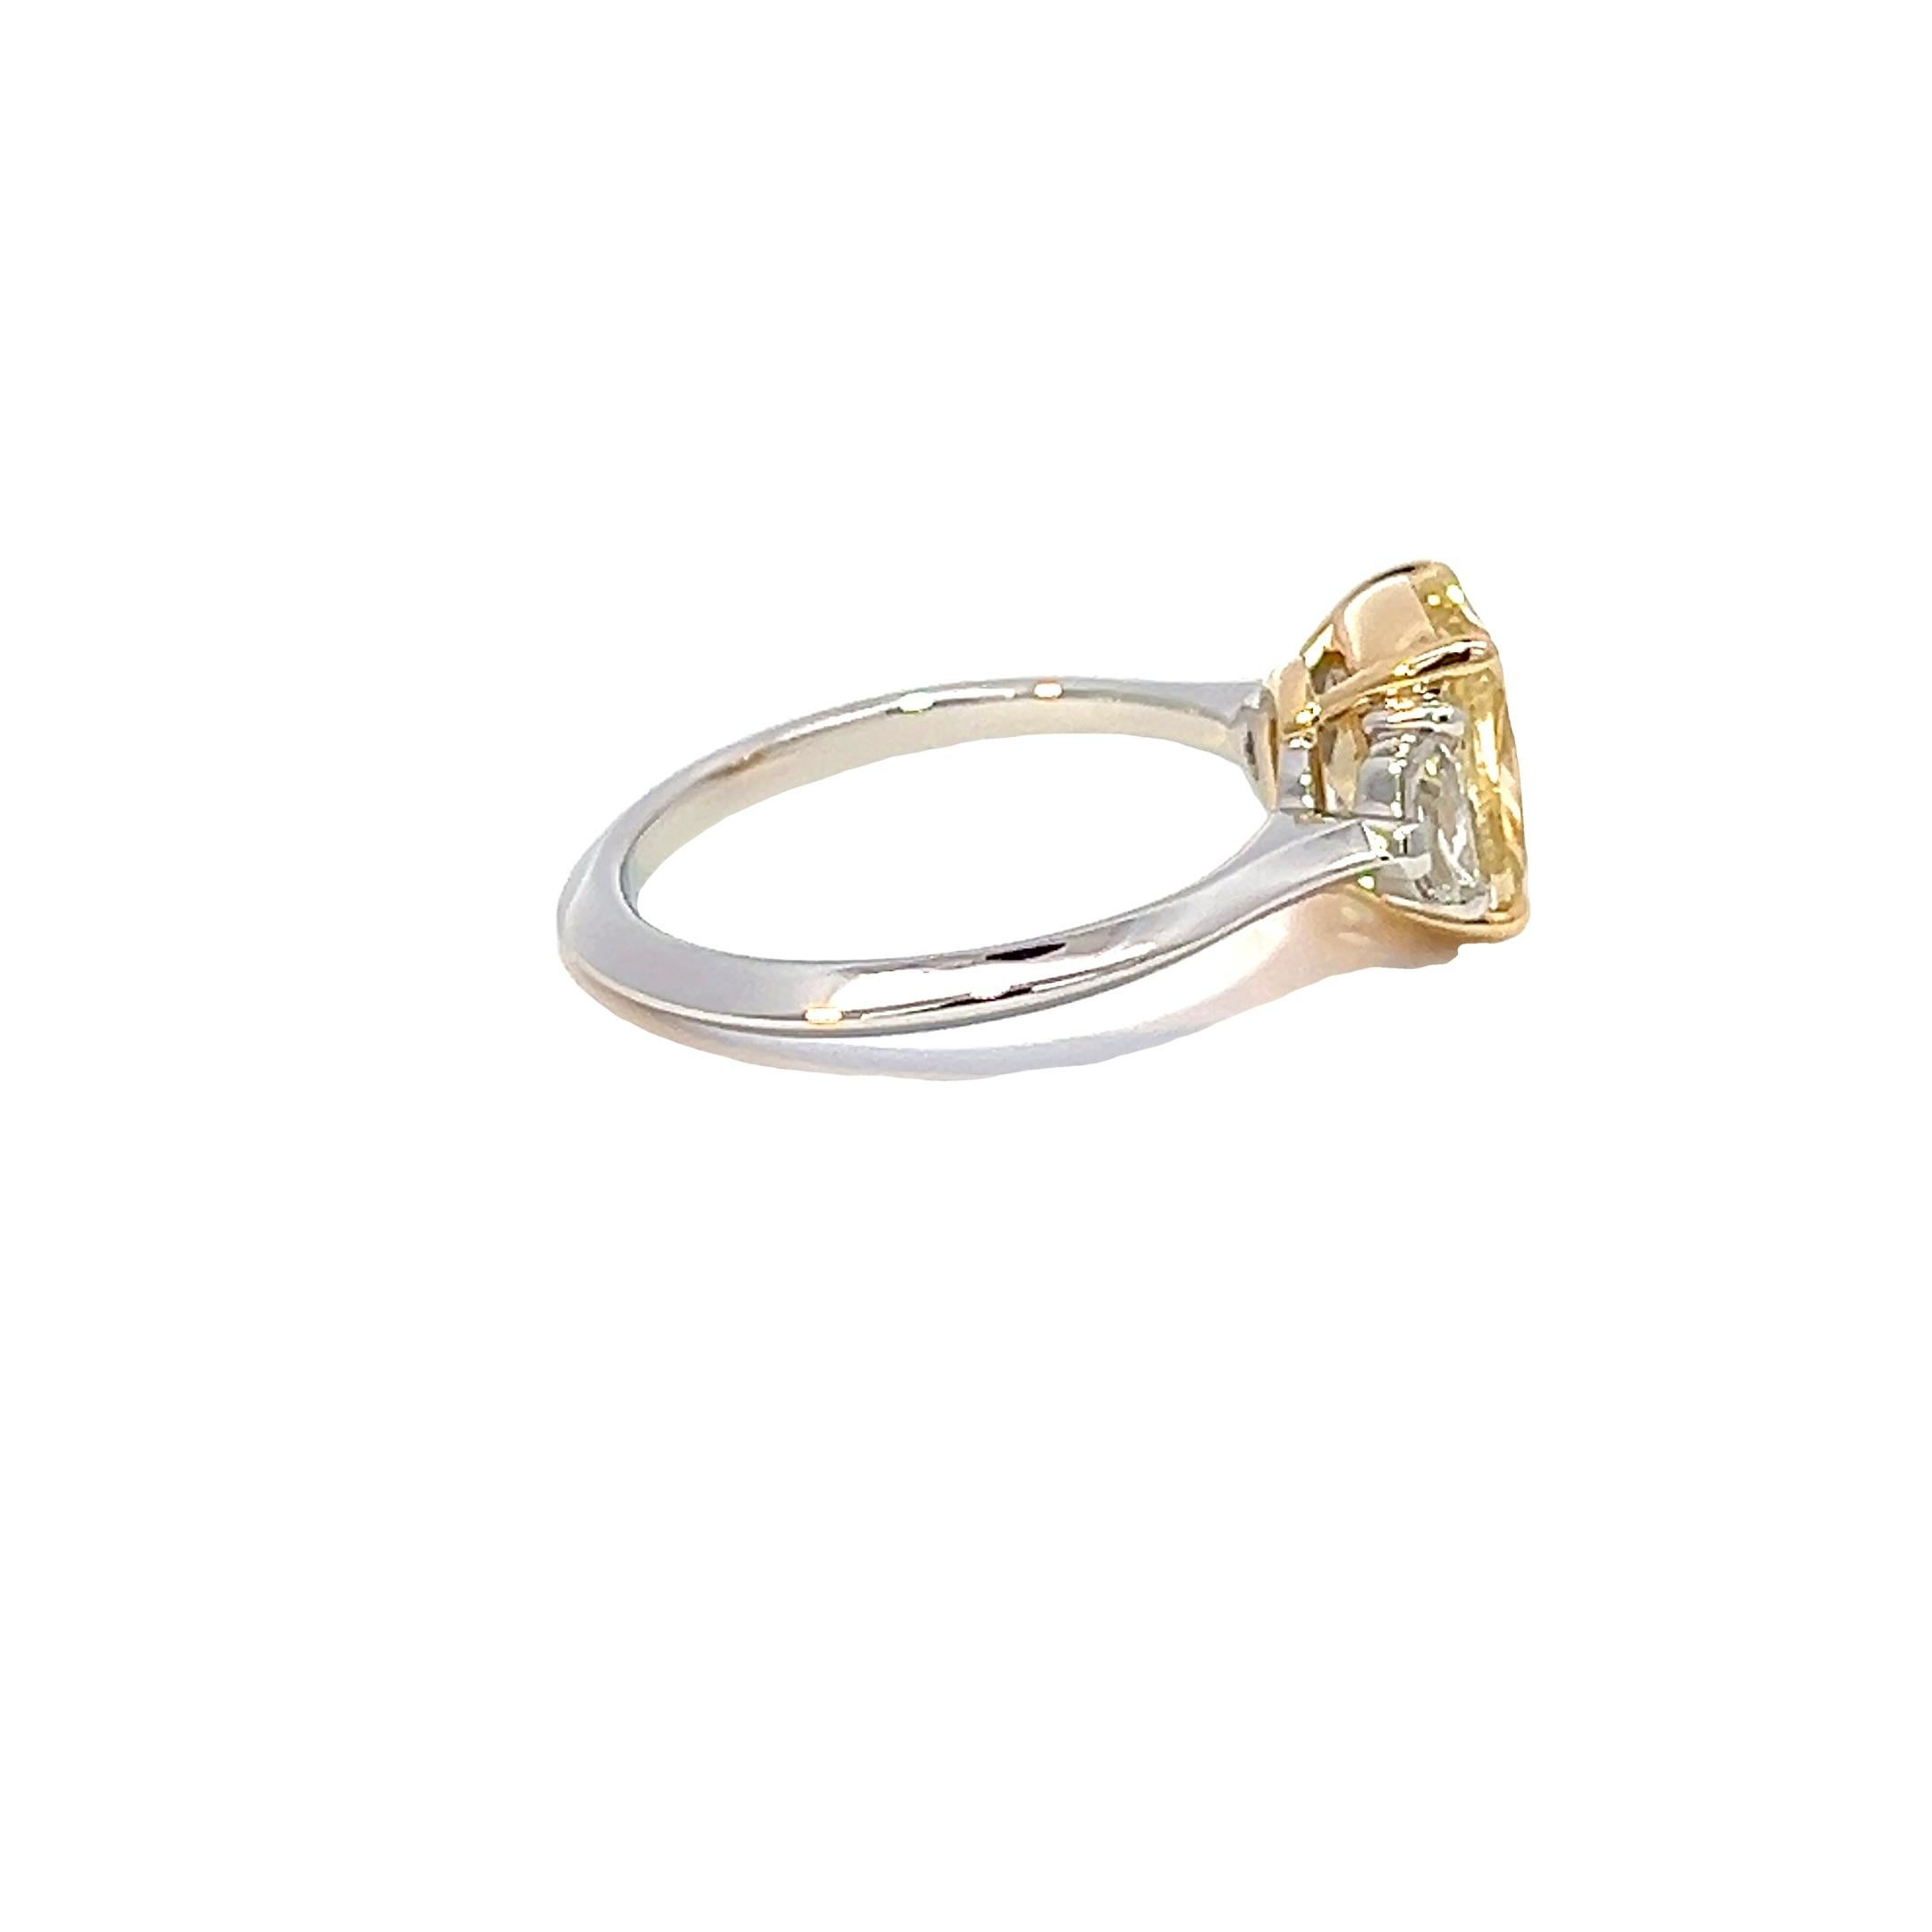 2.85CT Total Weight Fancy Intense Yellow Diamond Ring, GIA Cert Neuf - En vente à New York, NY